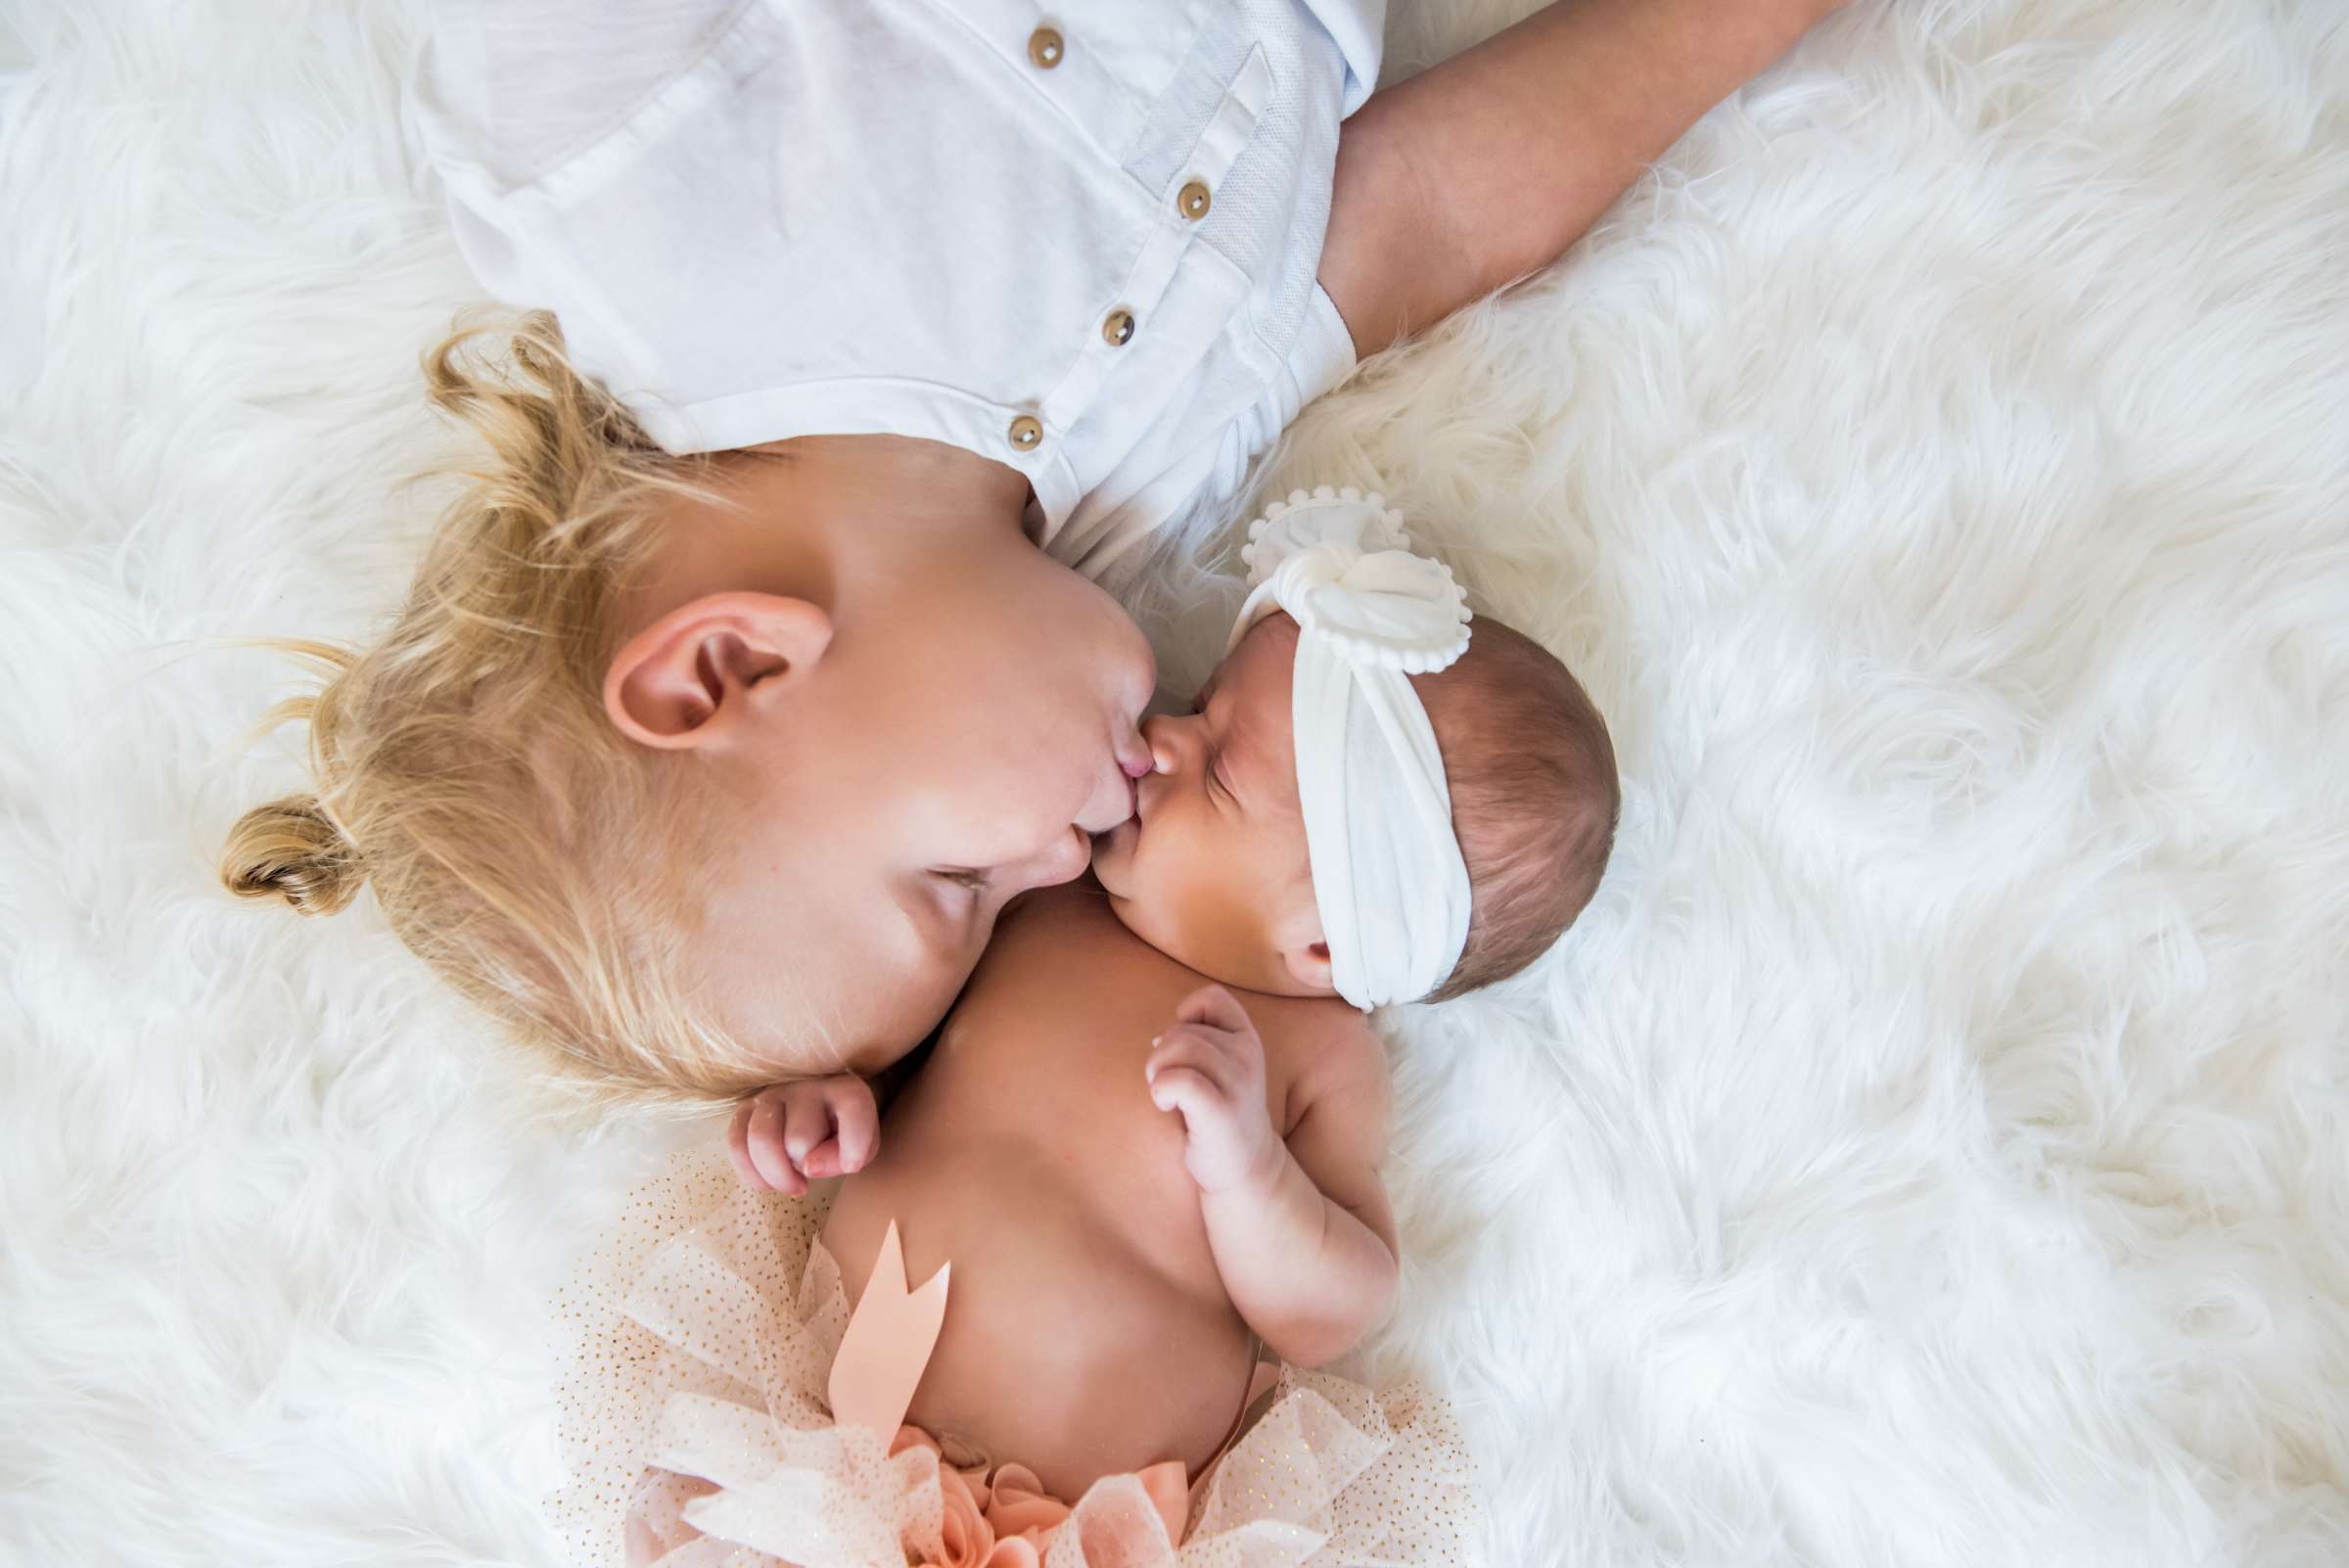 Newborn Photo Session, Ashley and Tyler Newborn Photo #1 by True Photography